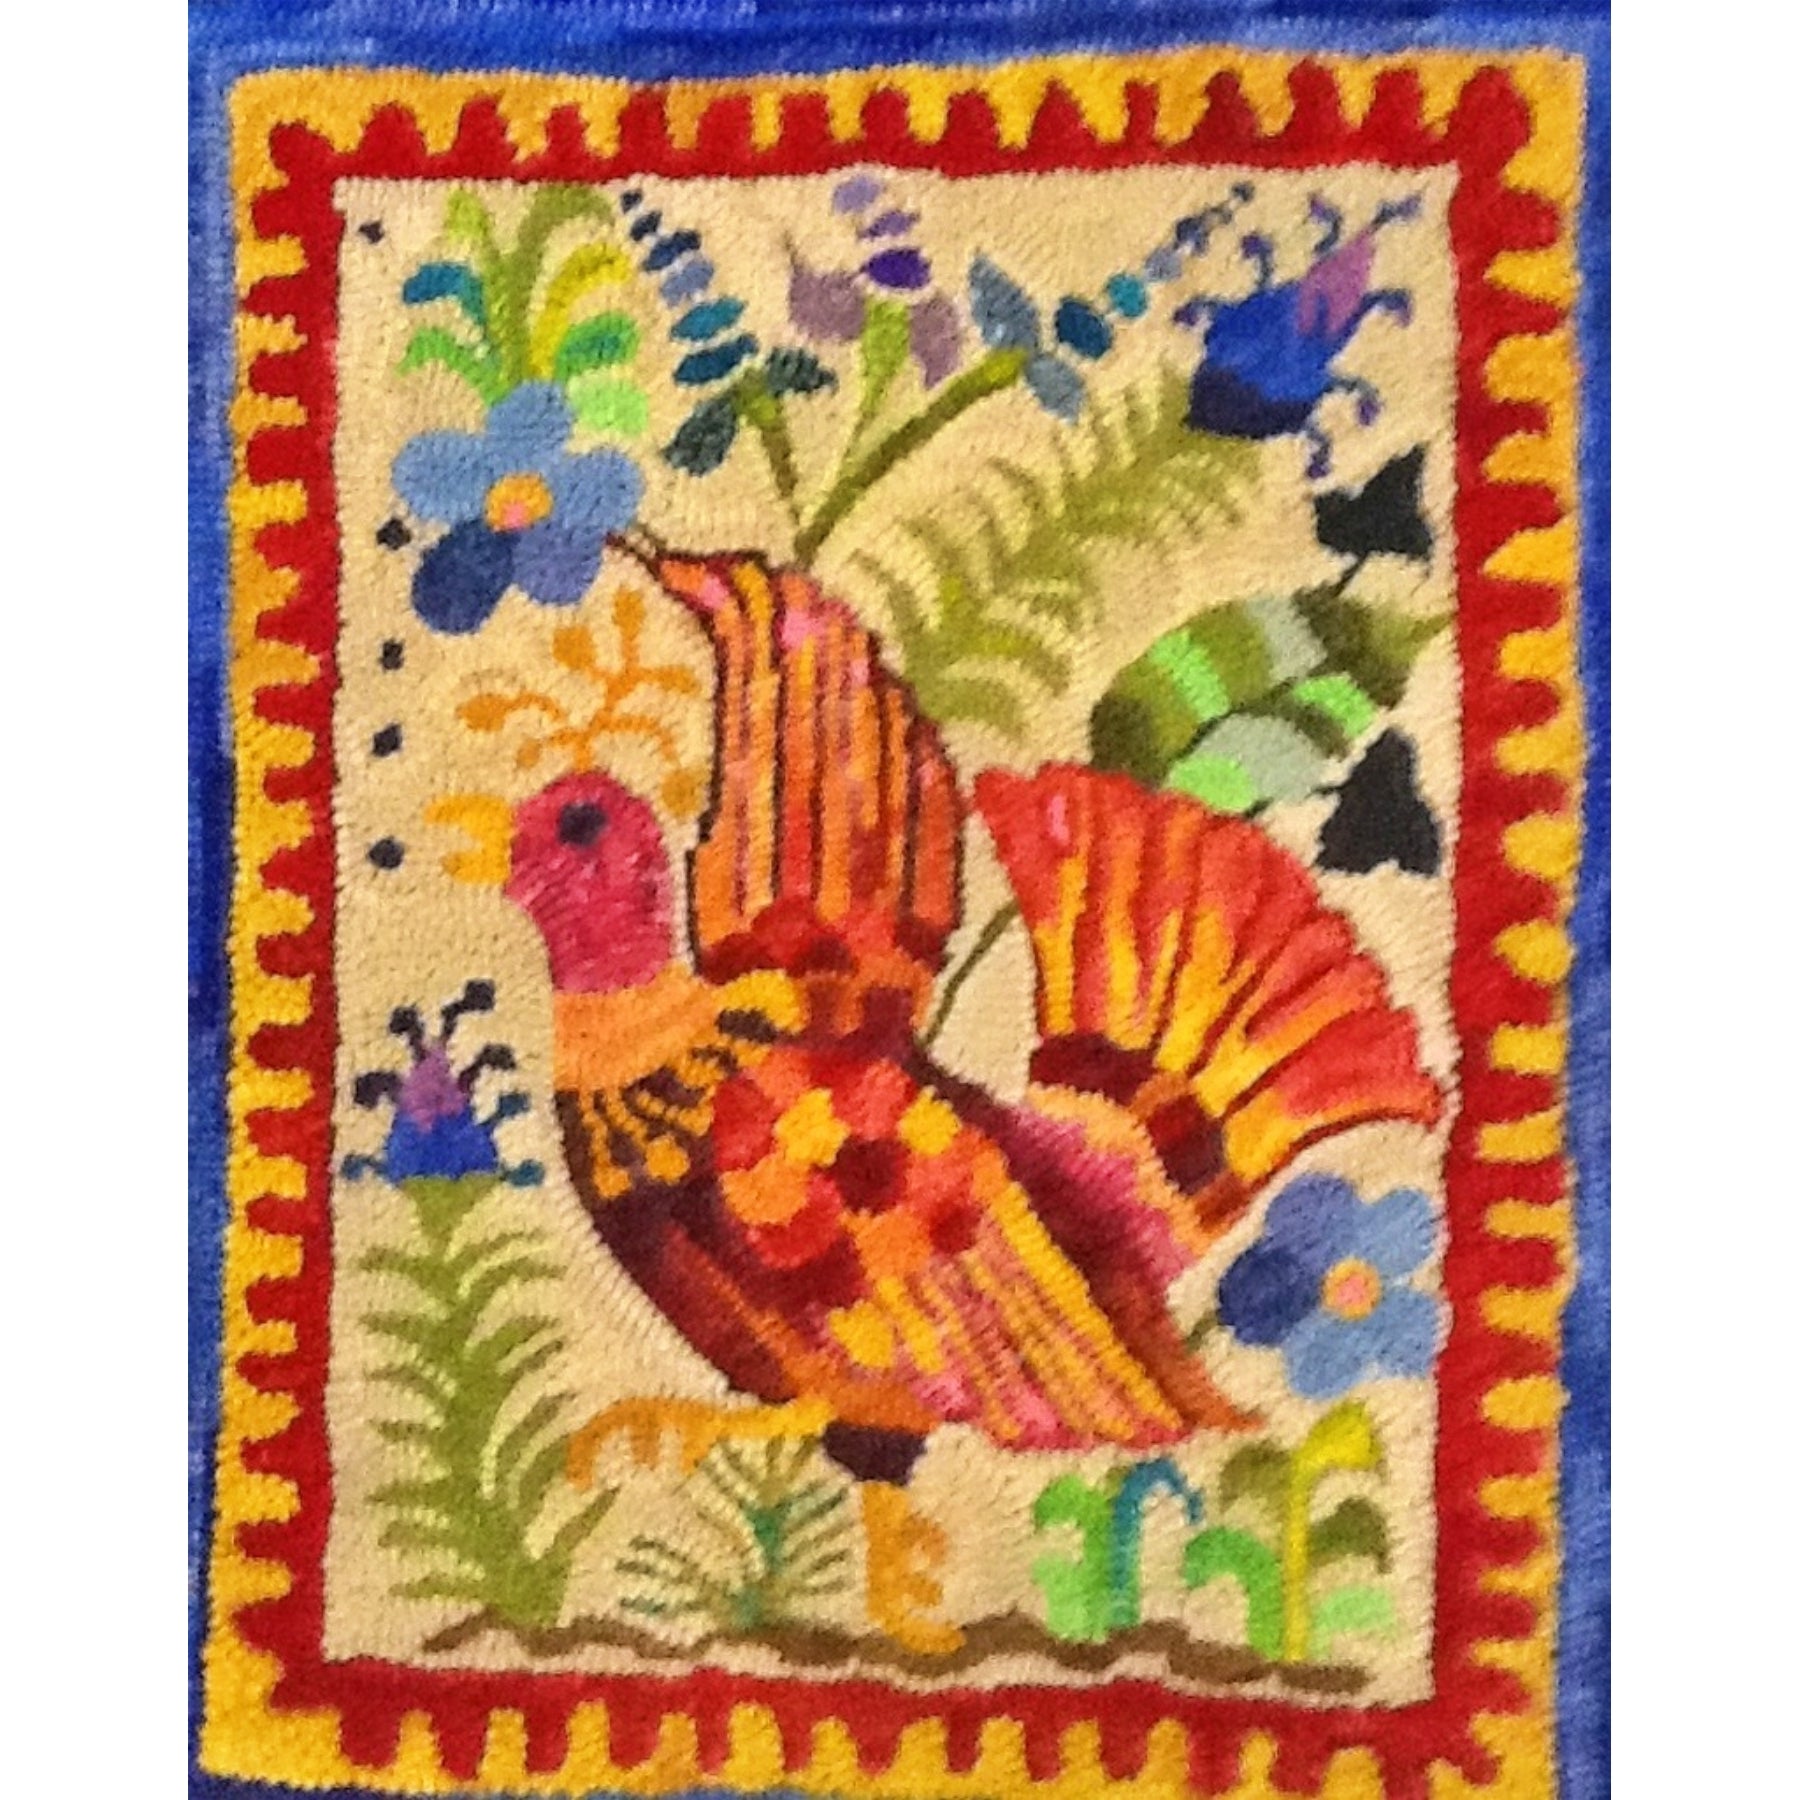 Oh Joyful Color, rug hooked by Ania Knap